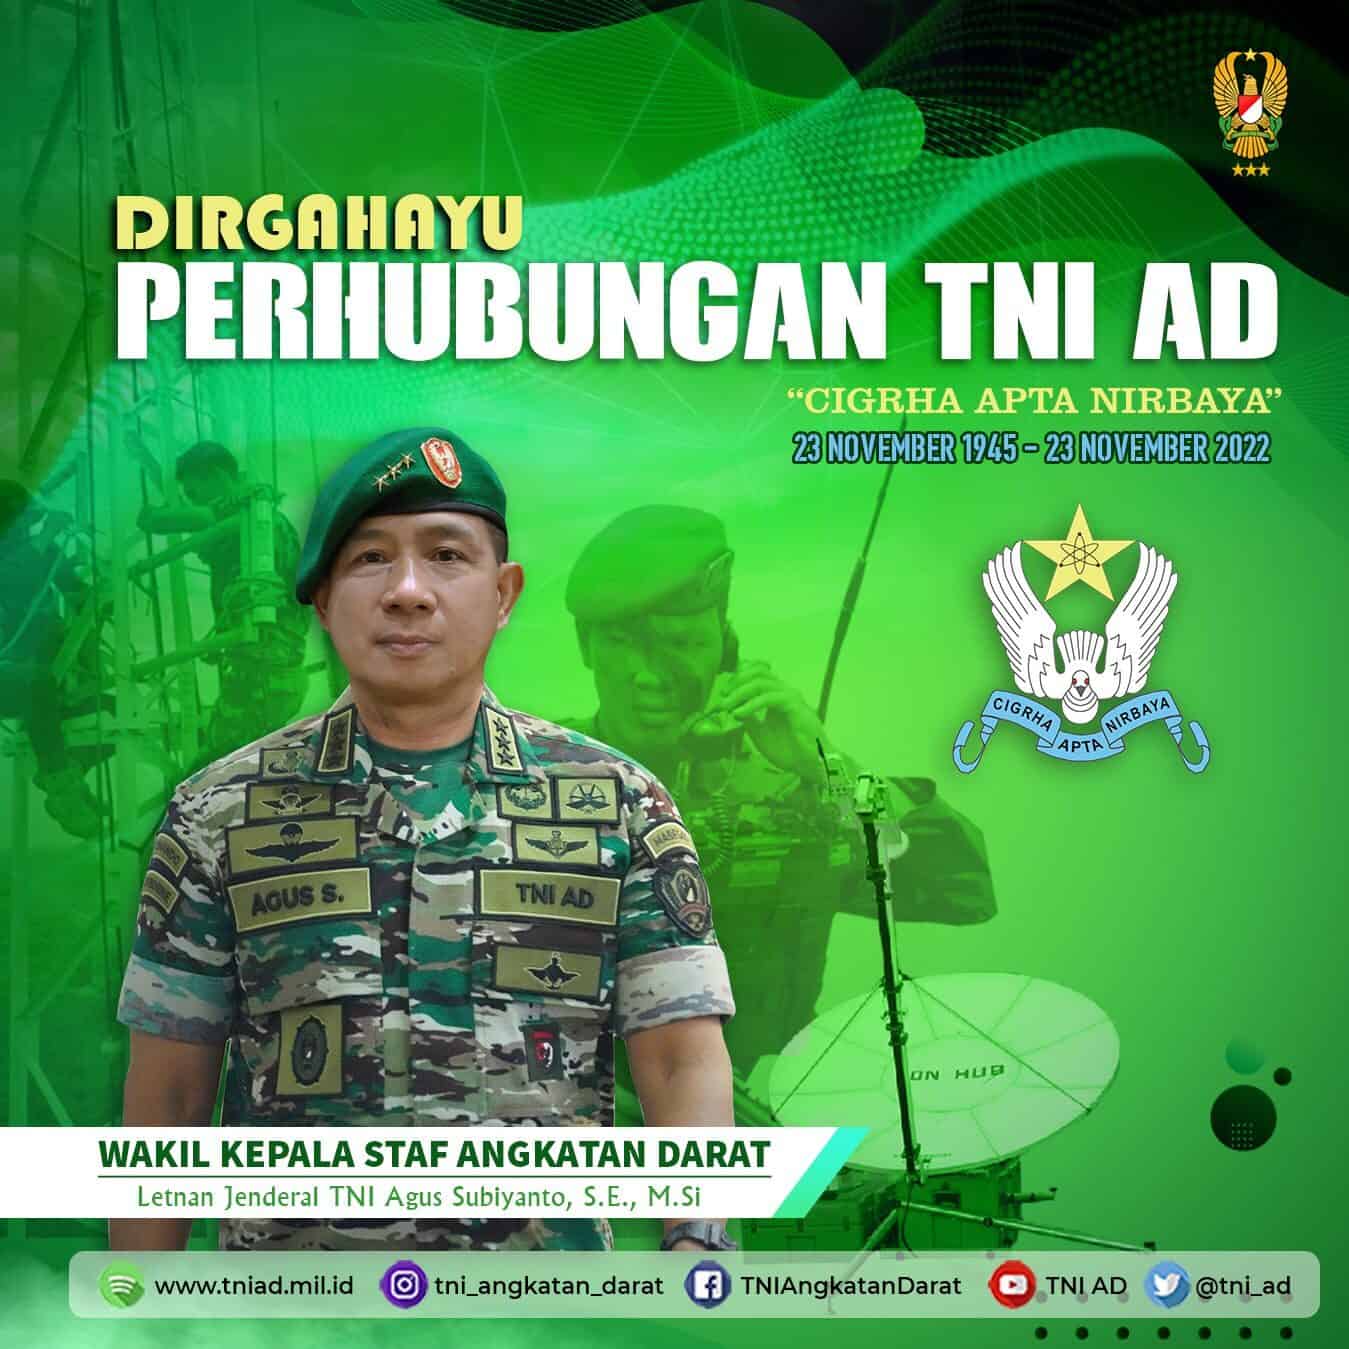 Dirgahayu Perhubungan TNI Angkatan Darat, 23 November 1945 – 23 November 2022 “Cighra Apta Nirbaya”